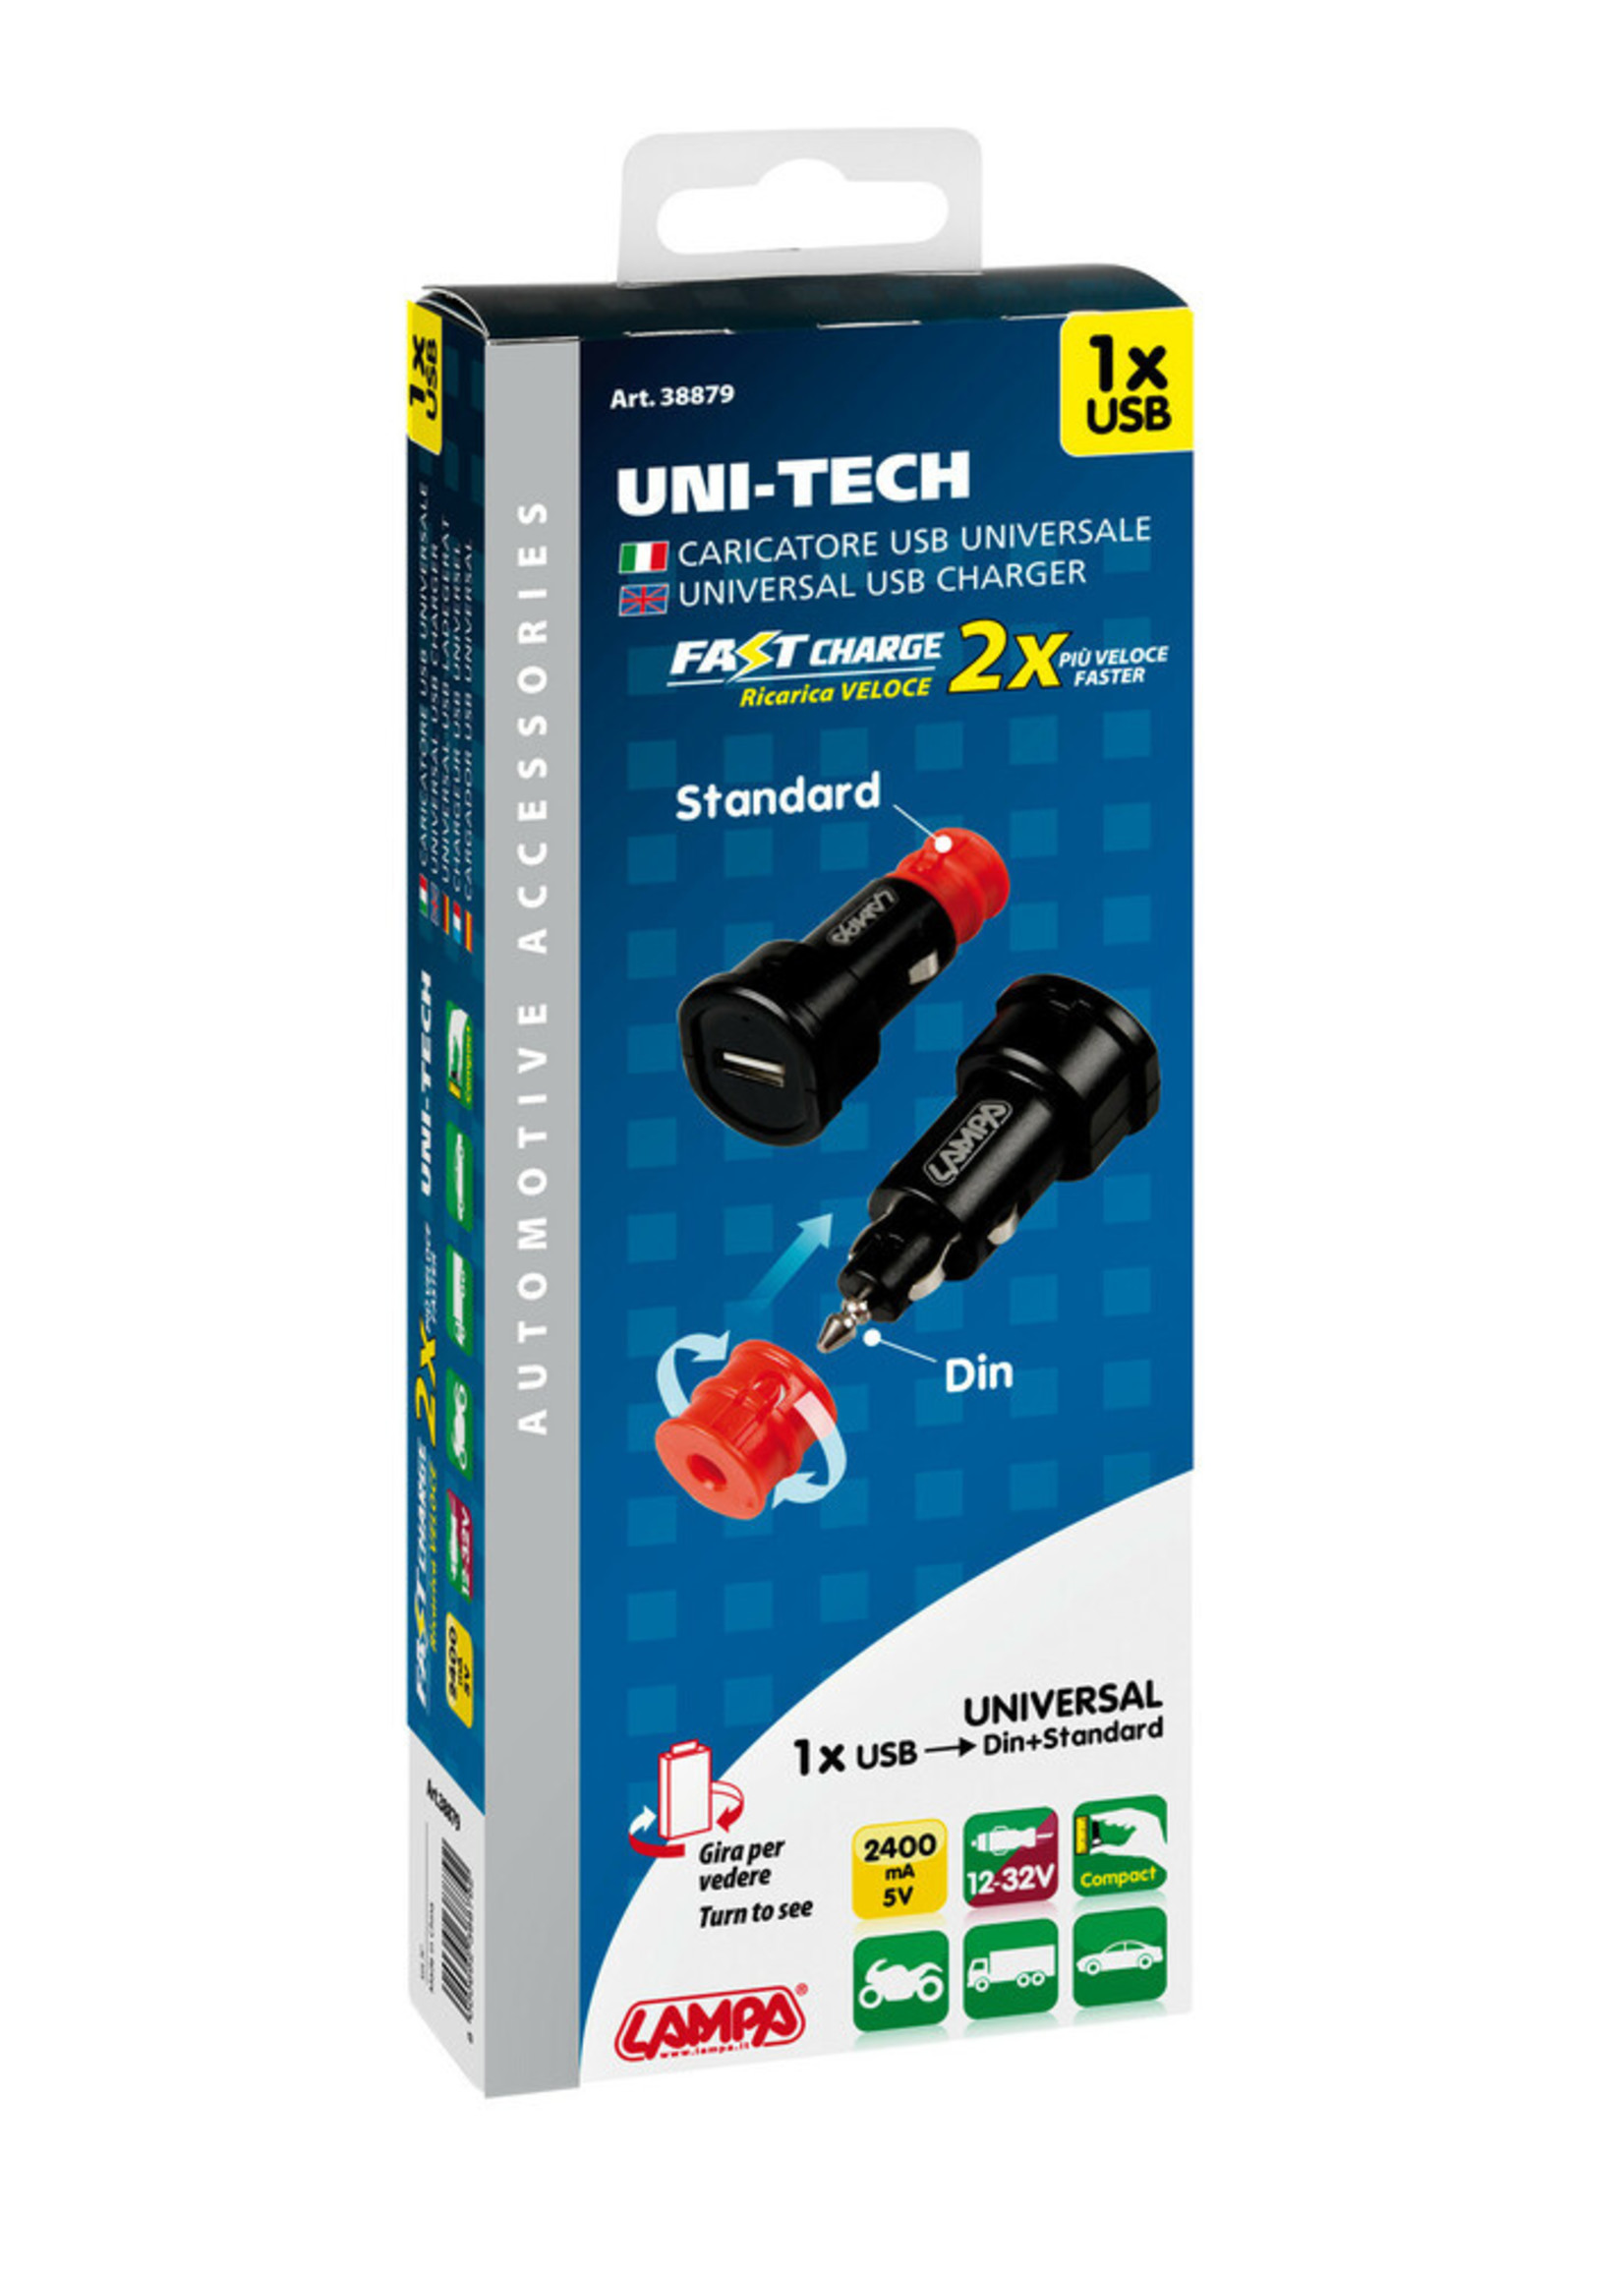 Optiline Uni-Tech, 1 Usb port universal charger - Fast Charge - 2400 mA - 12/32V